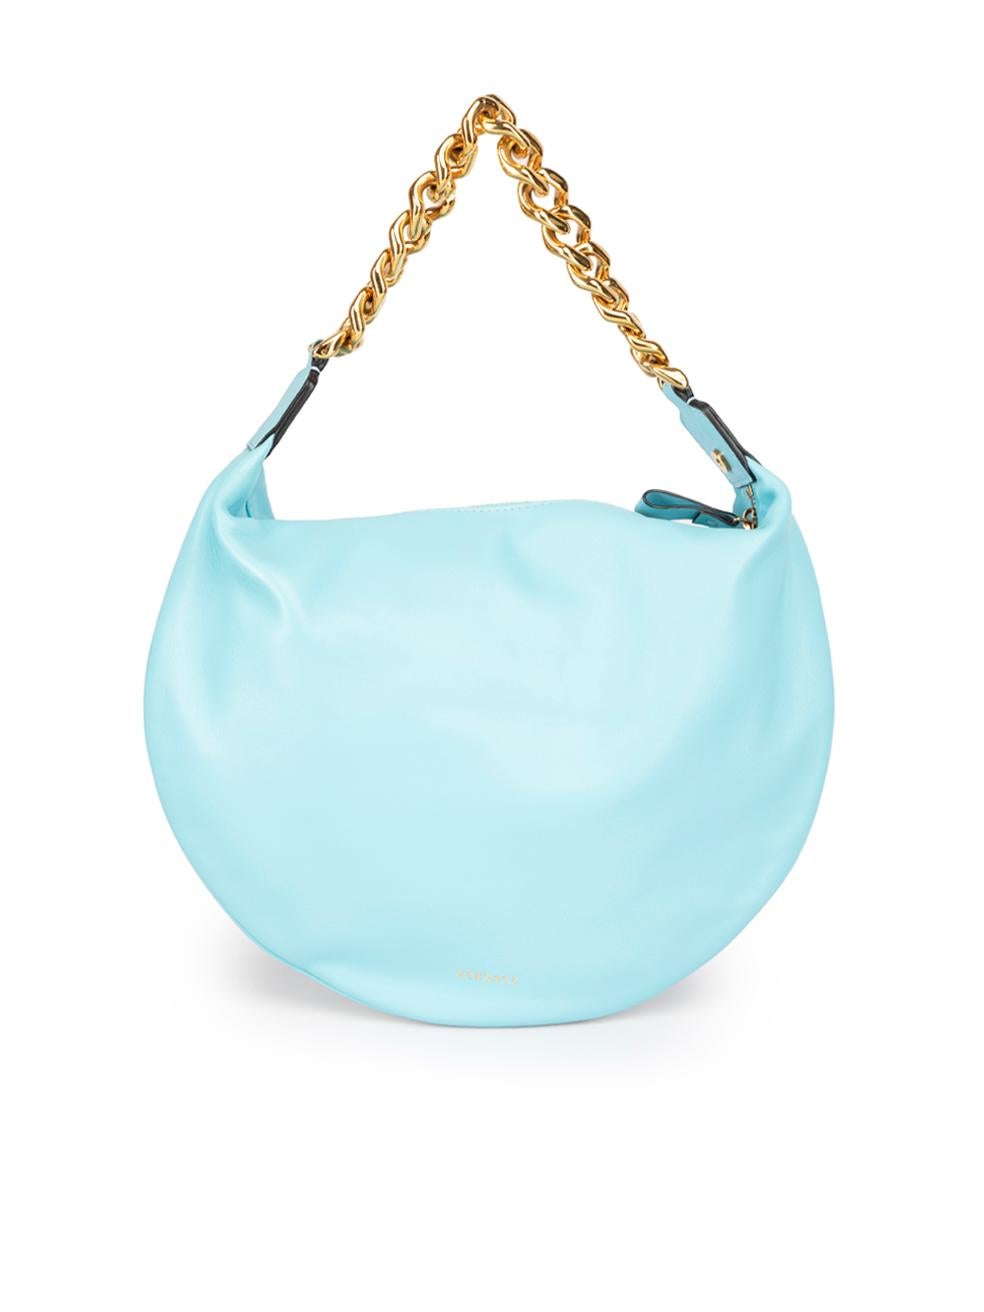 Versace Blue La Medusa Chain Hobo Shoulder Bag In Good Condition For Sale In London, GB